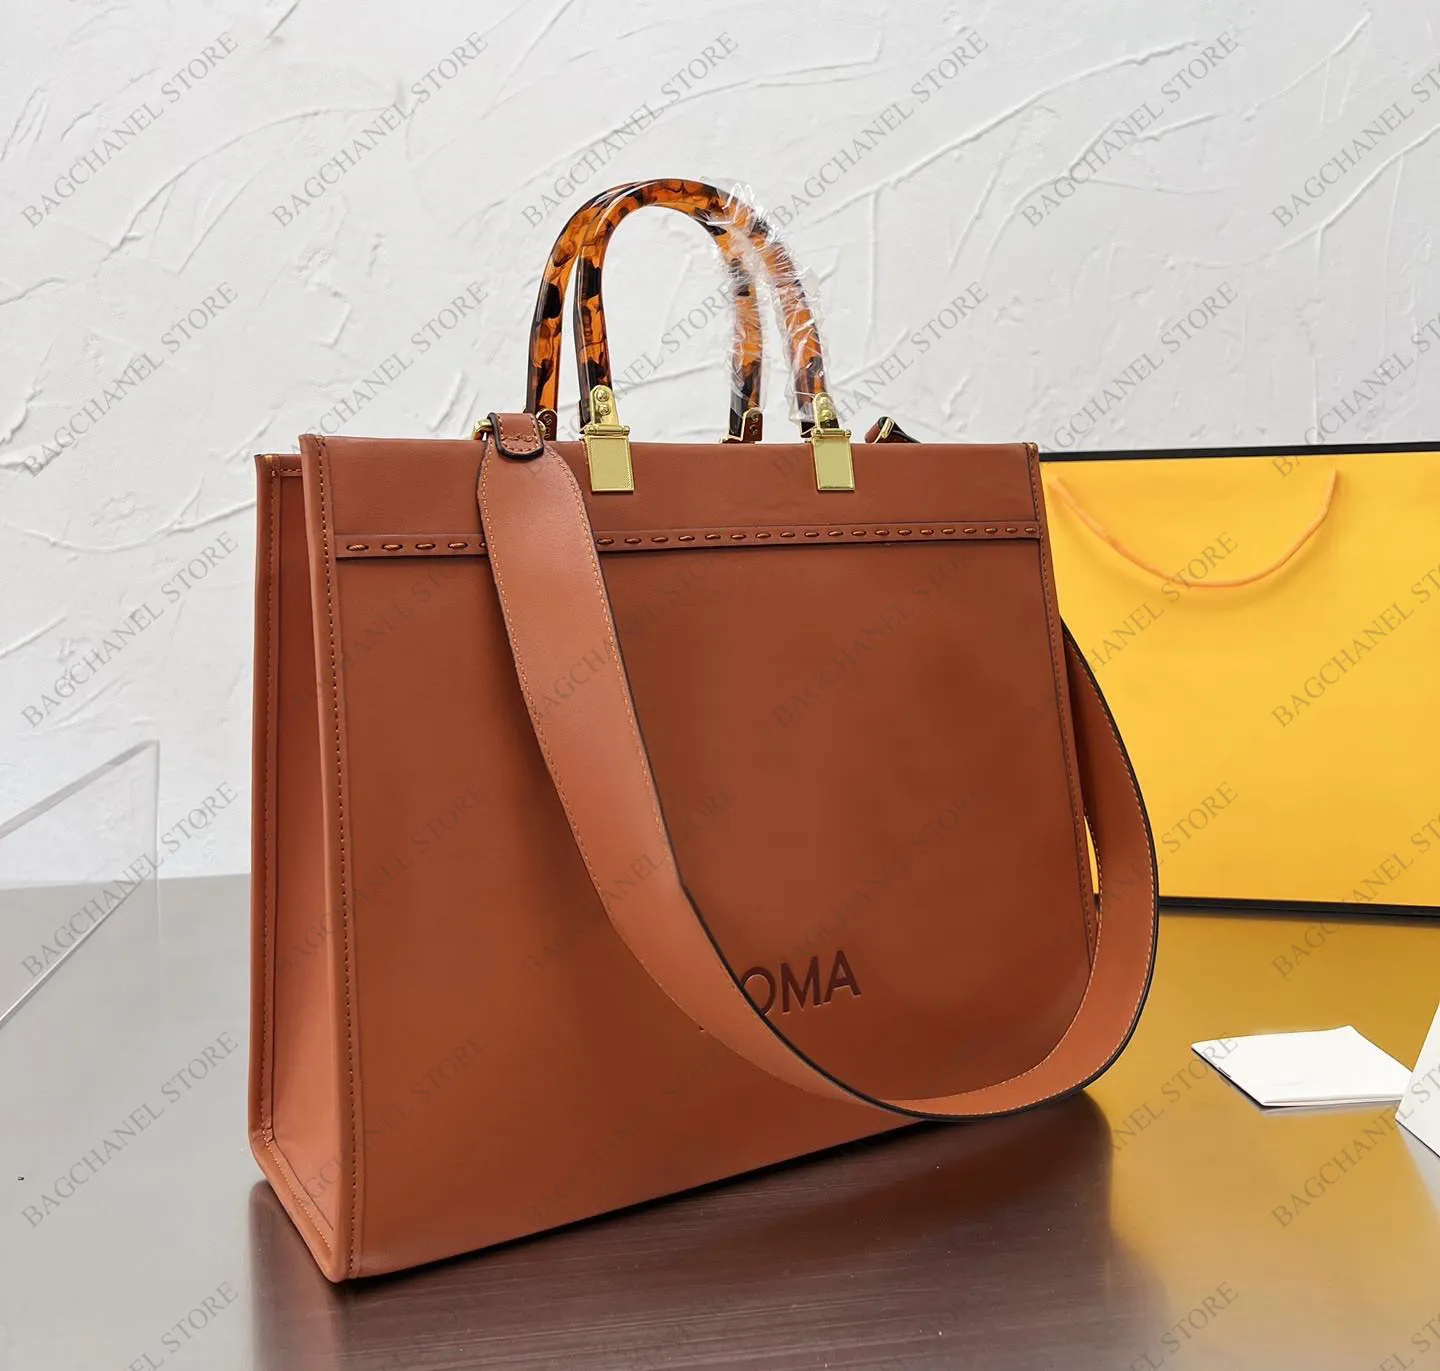 Bolsas de lujo bolsas para mujeres bolsas de compras diseñador bolso clásico patrón de letras bolsos de hombro bolsos de moda